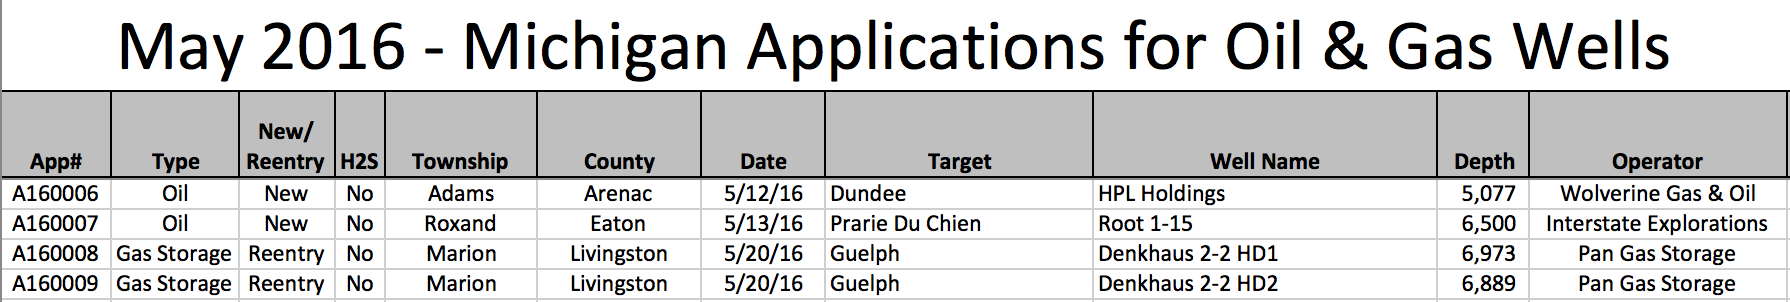 michigan oil & gas applications may 2016